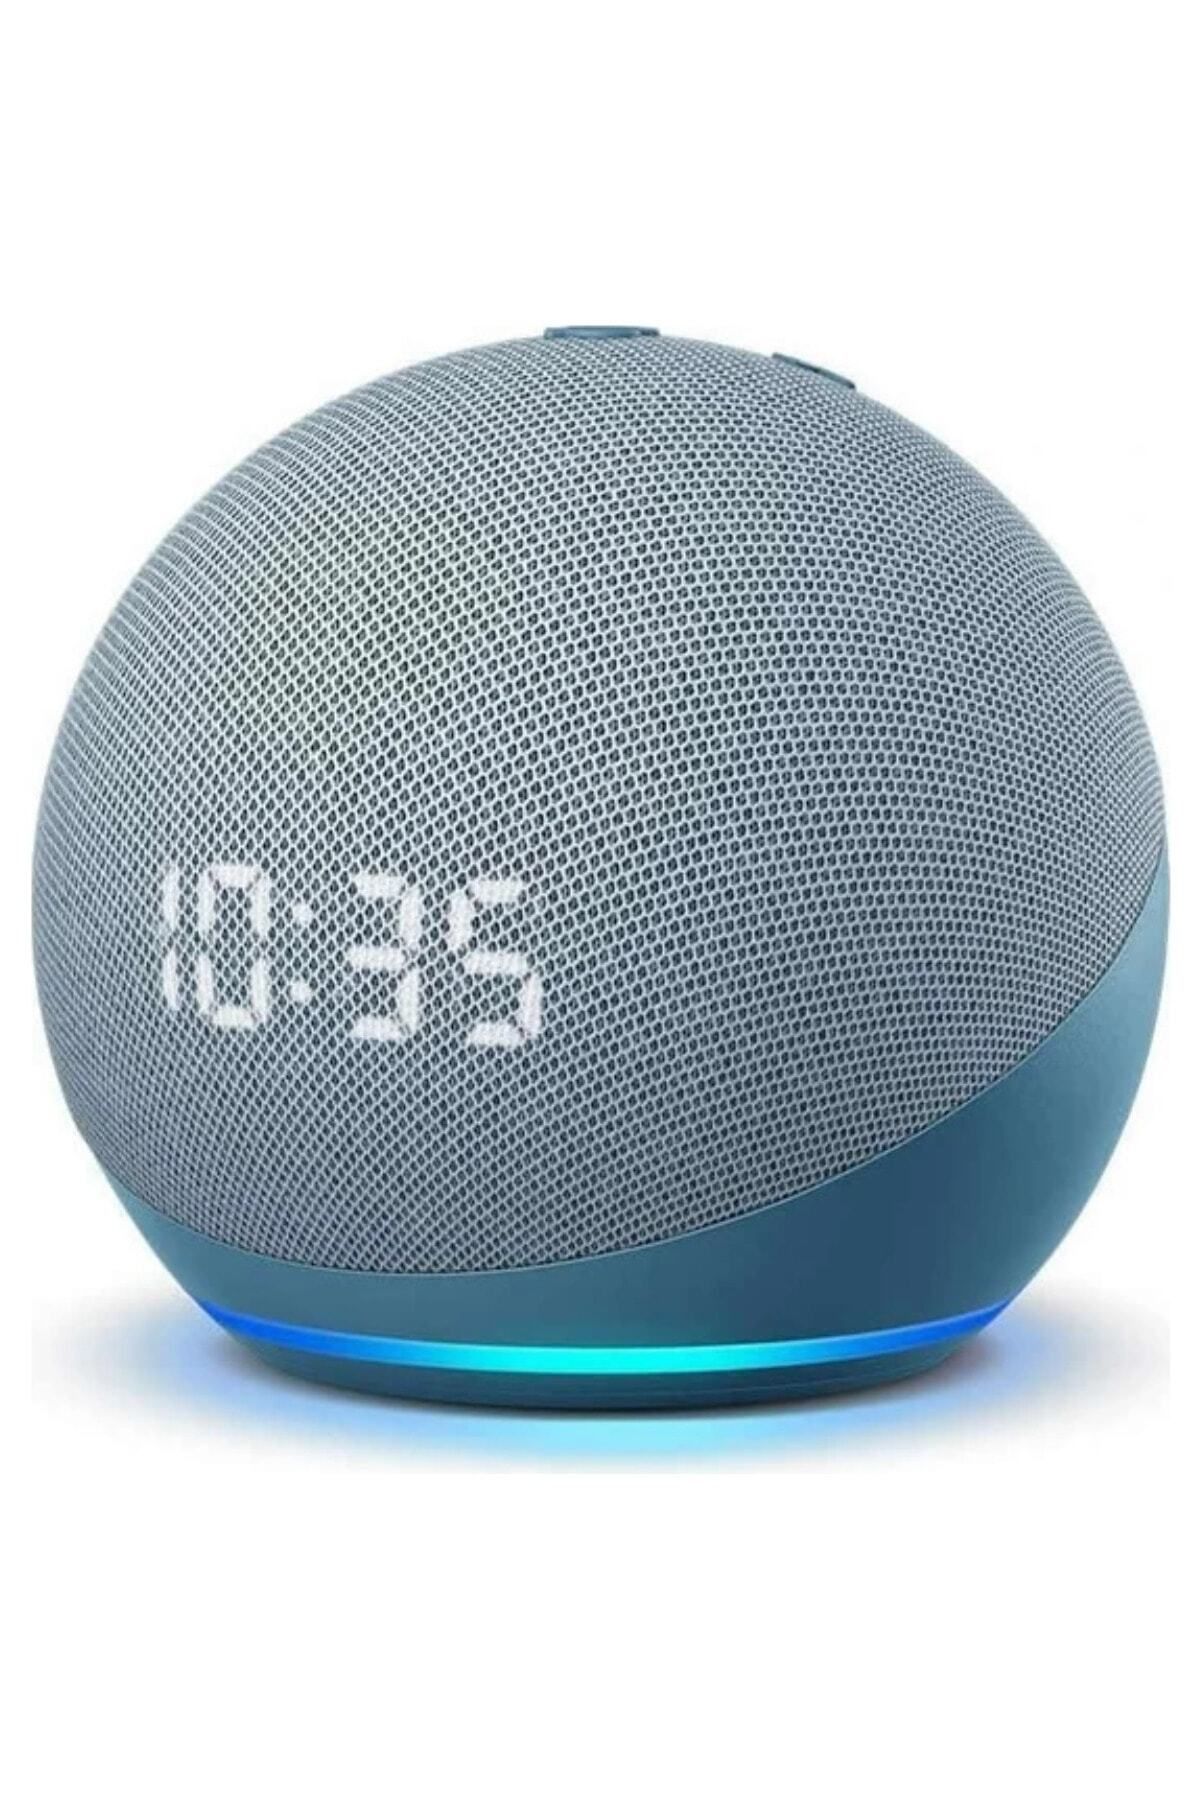 ALEXA Amazon Mavi Echo Dot 5th Generation 5. Nesil Saatli Akıllı Asistan Hoparlör Dahil